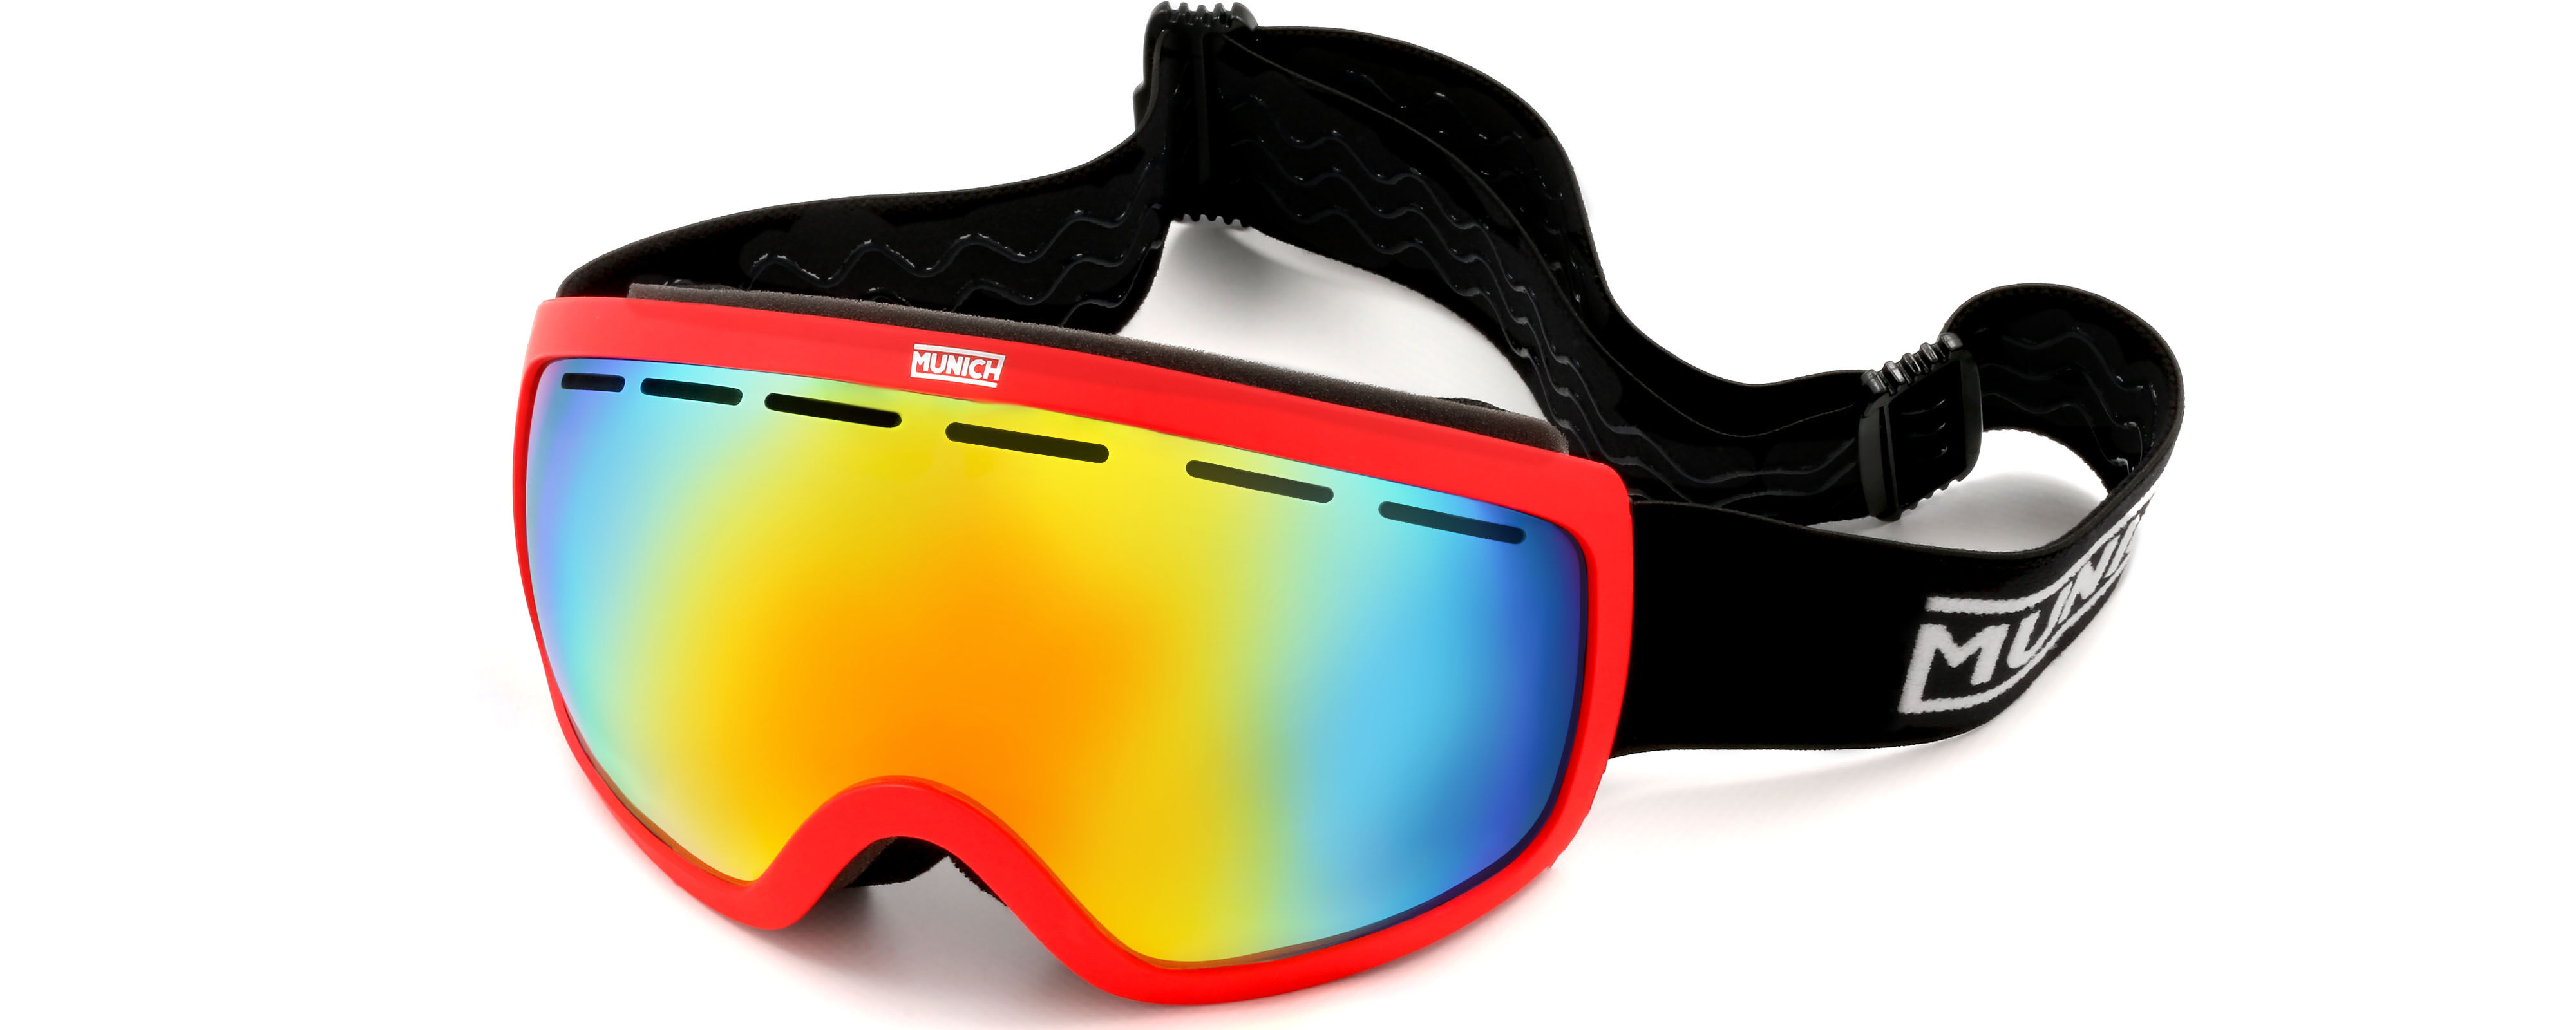 Mascara-Ski-Munich-27/s C02 175* Gafas De Sol Rojo